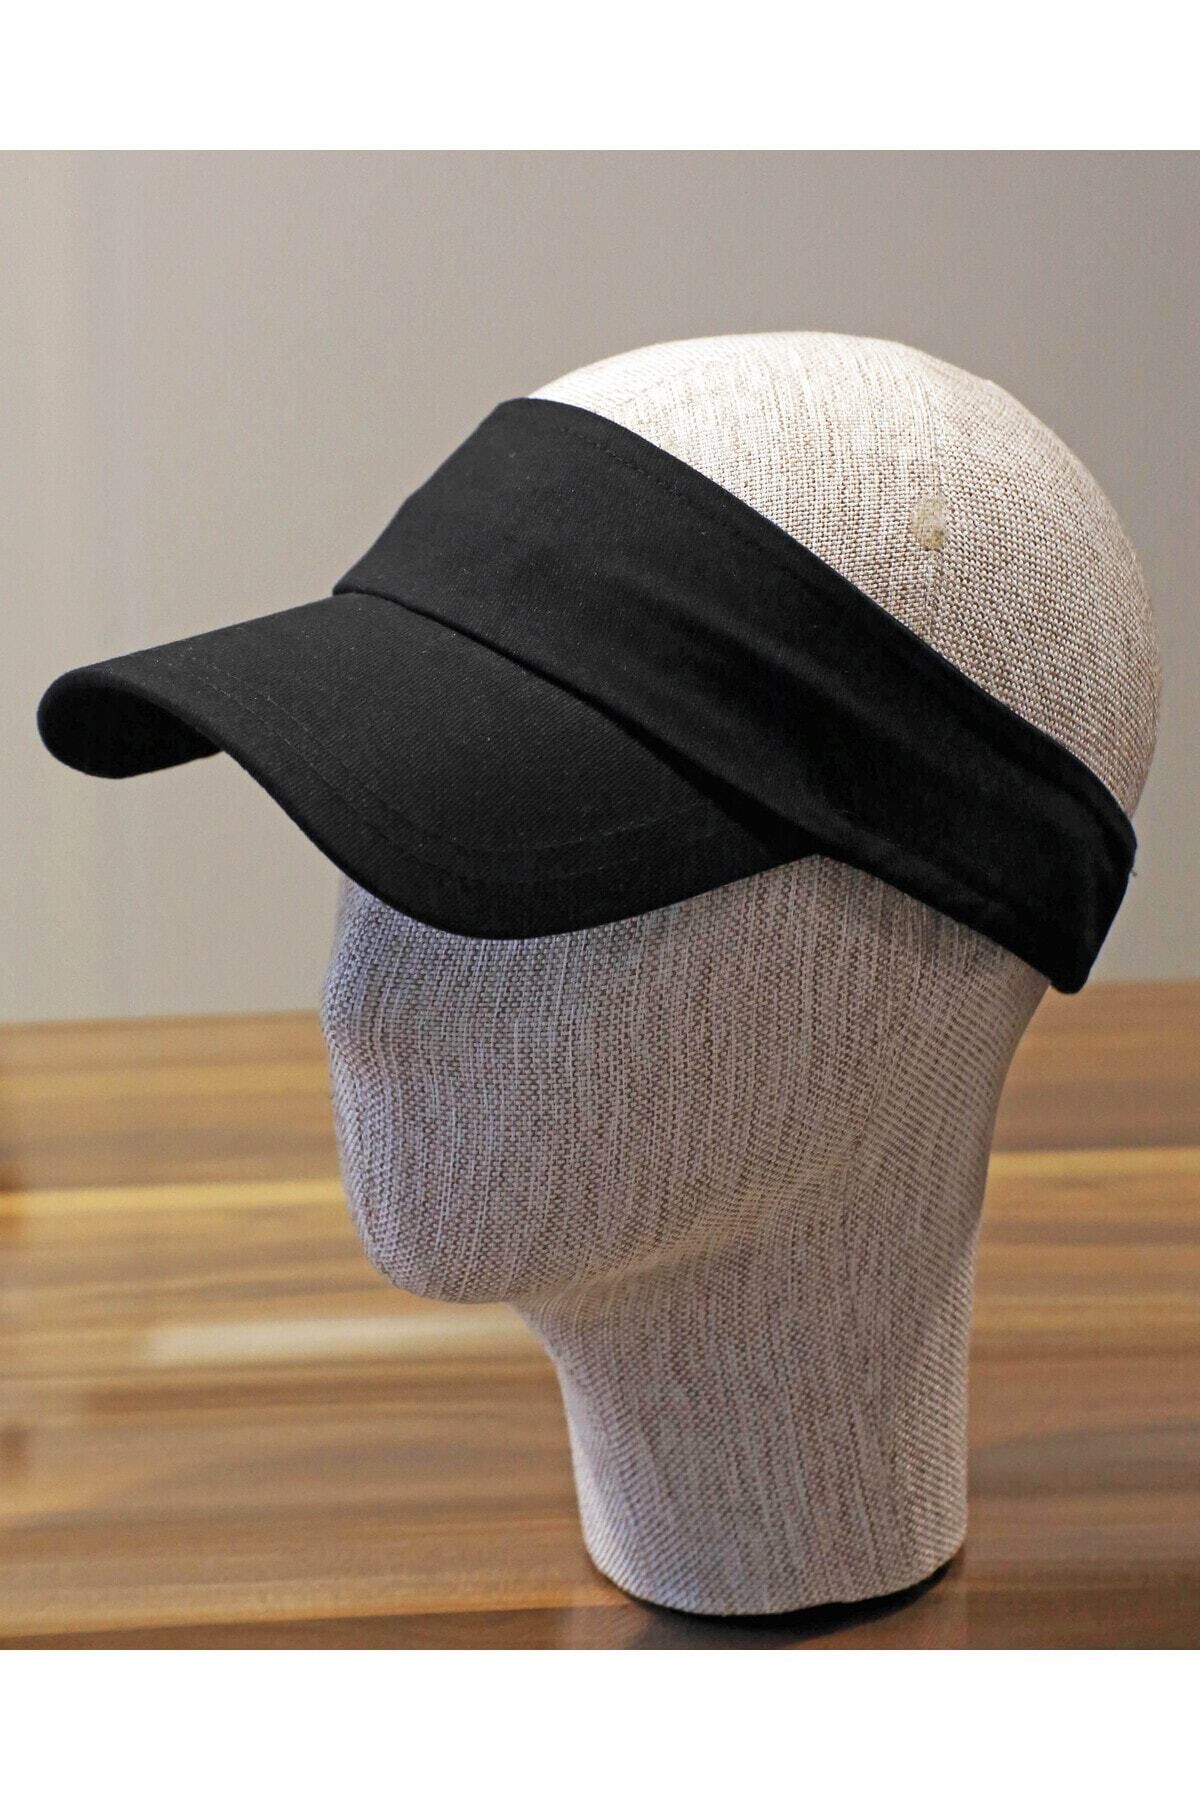 Özgöksu Şapka Unısex Vizör Siperlikli Şapka Tenis Şapkası